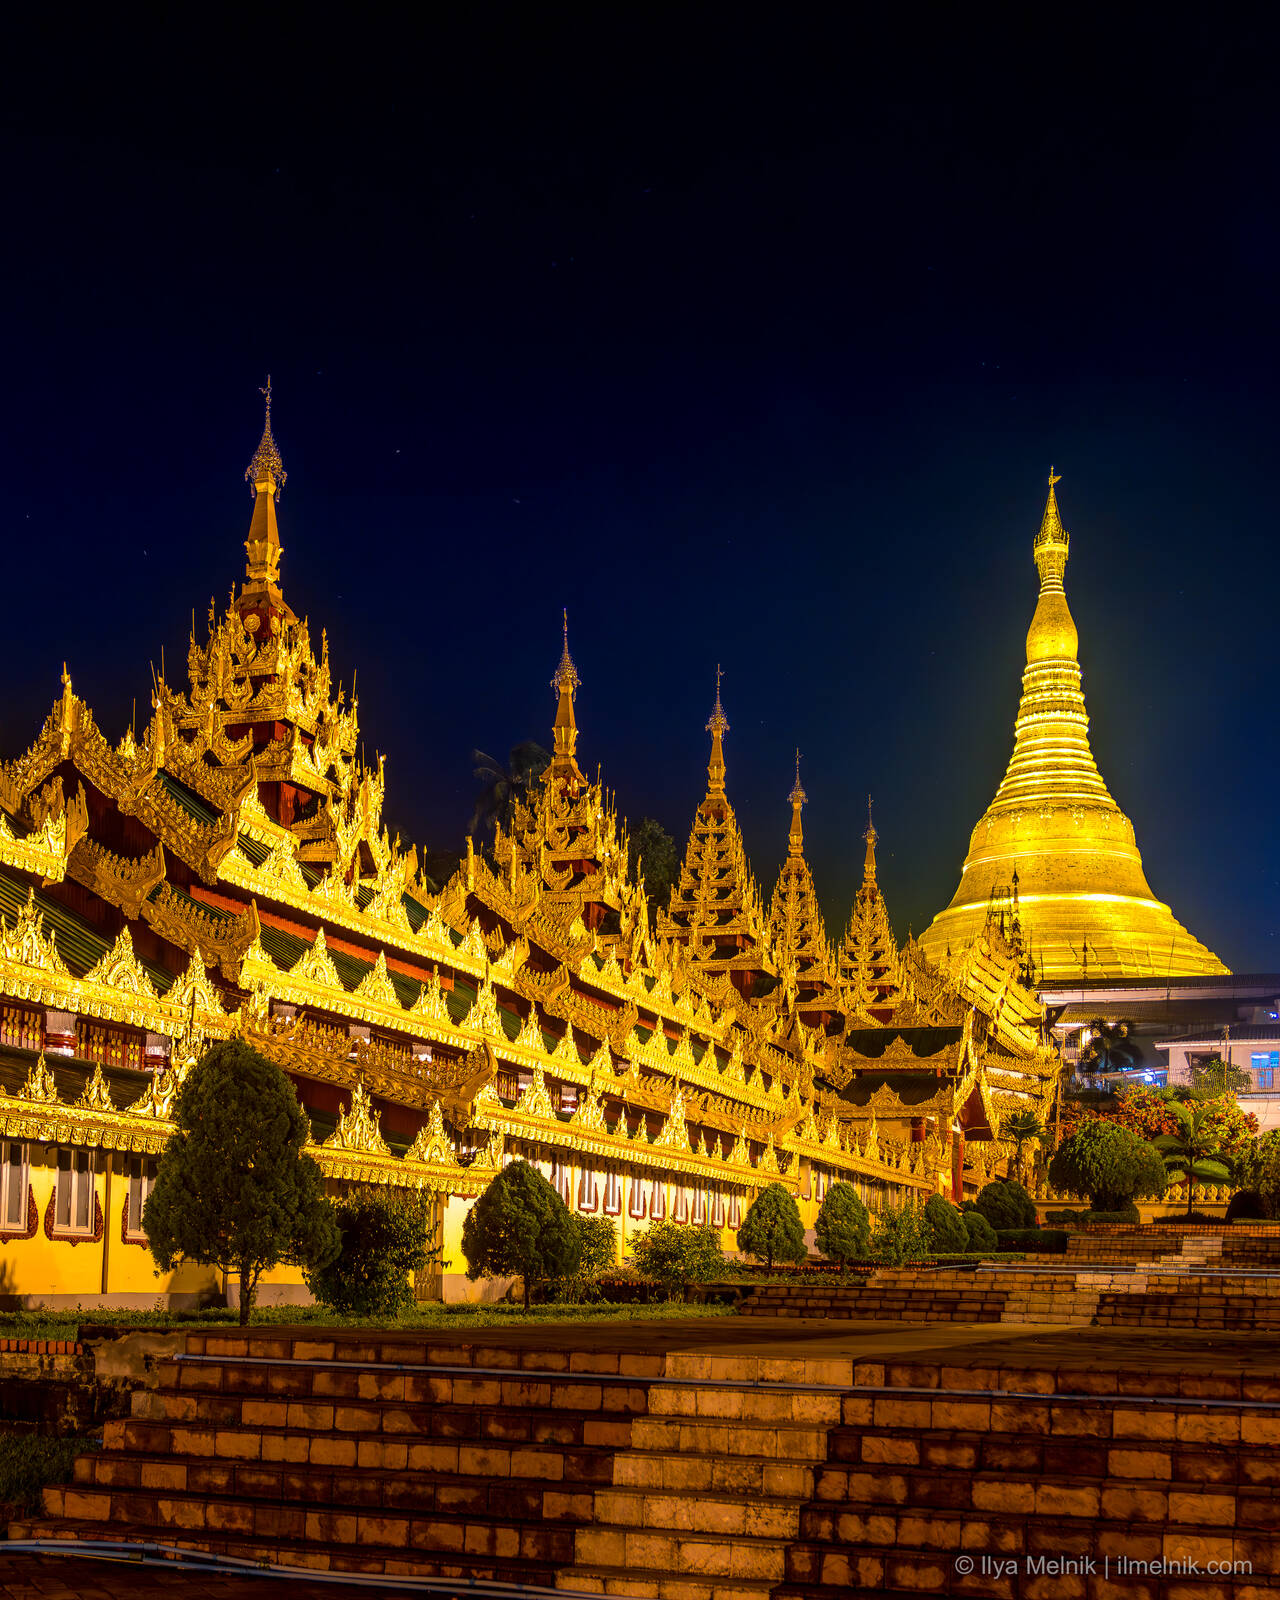 Image of Shwedagon Pagoda ရွှေတိဂုံစေတီတော် by Ilya Melnik